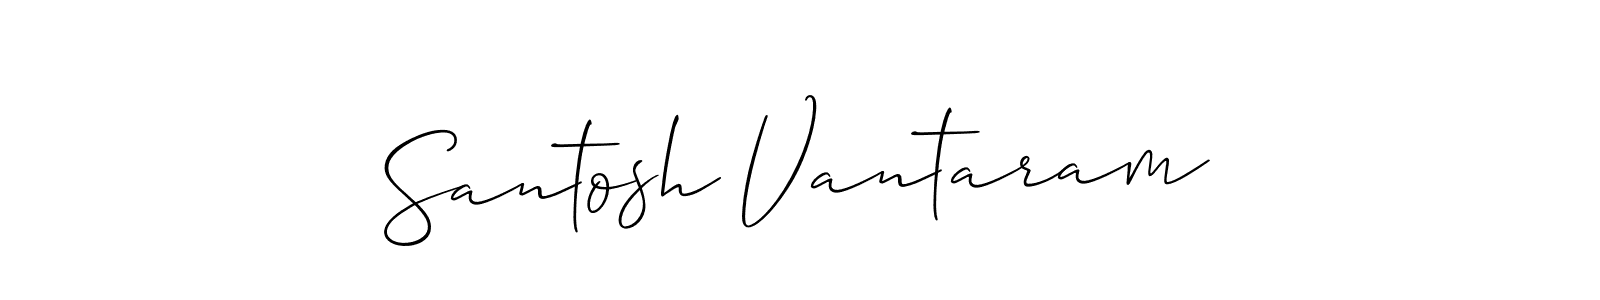 How to make Santosh Vantaram signature? Allison_Script is a professional autograph style. Create handwritten signature for Santosh Vantaram name. Santosh Vantaram signature style 2 images and pictures png